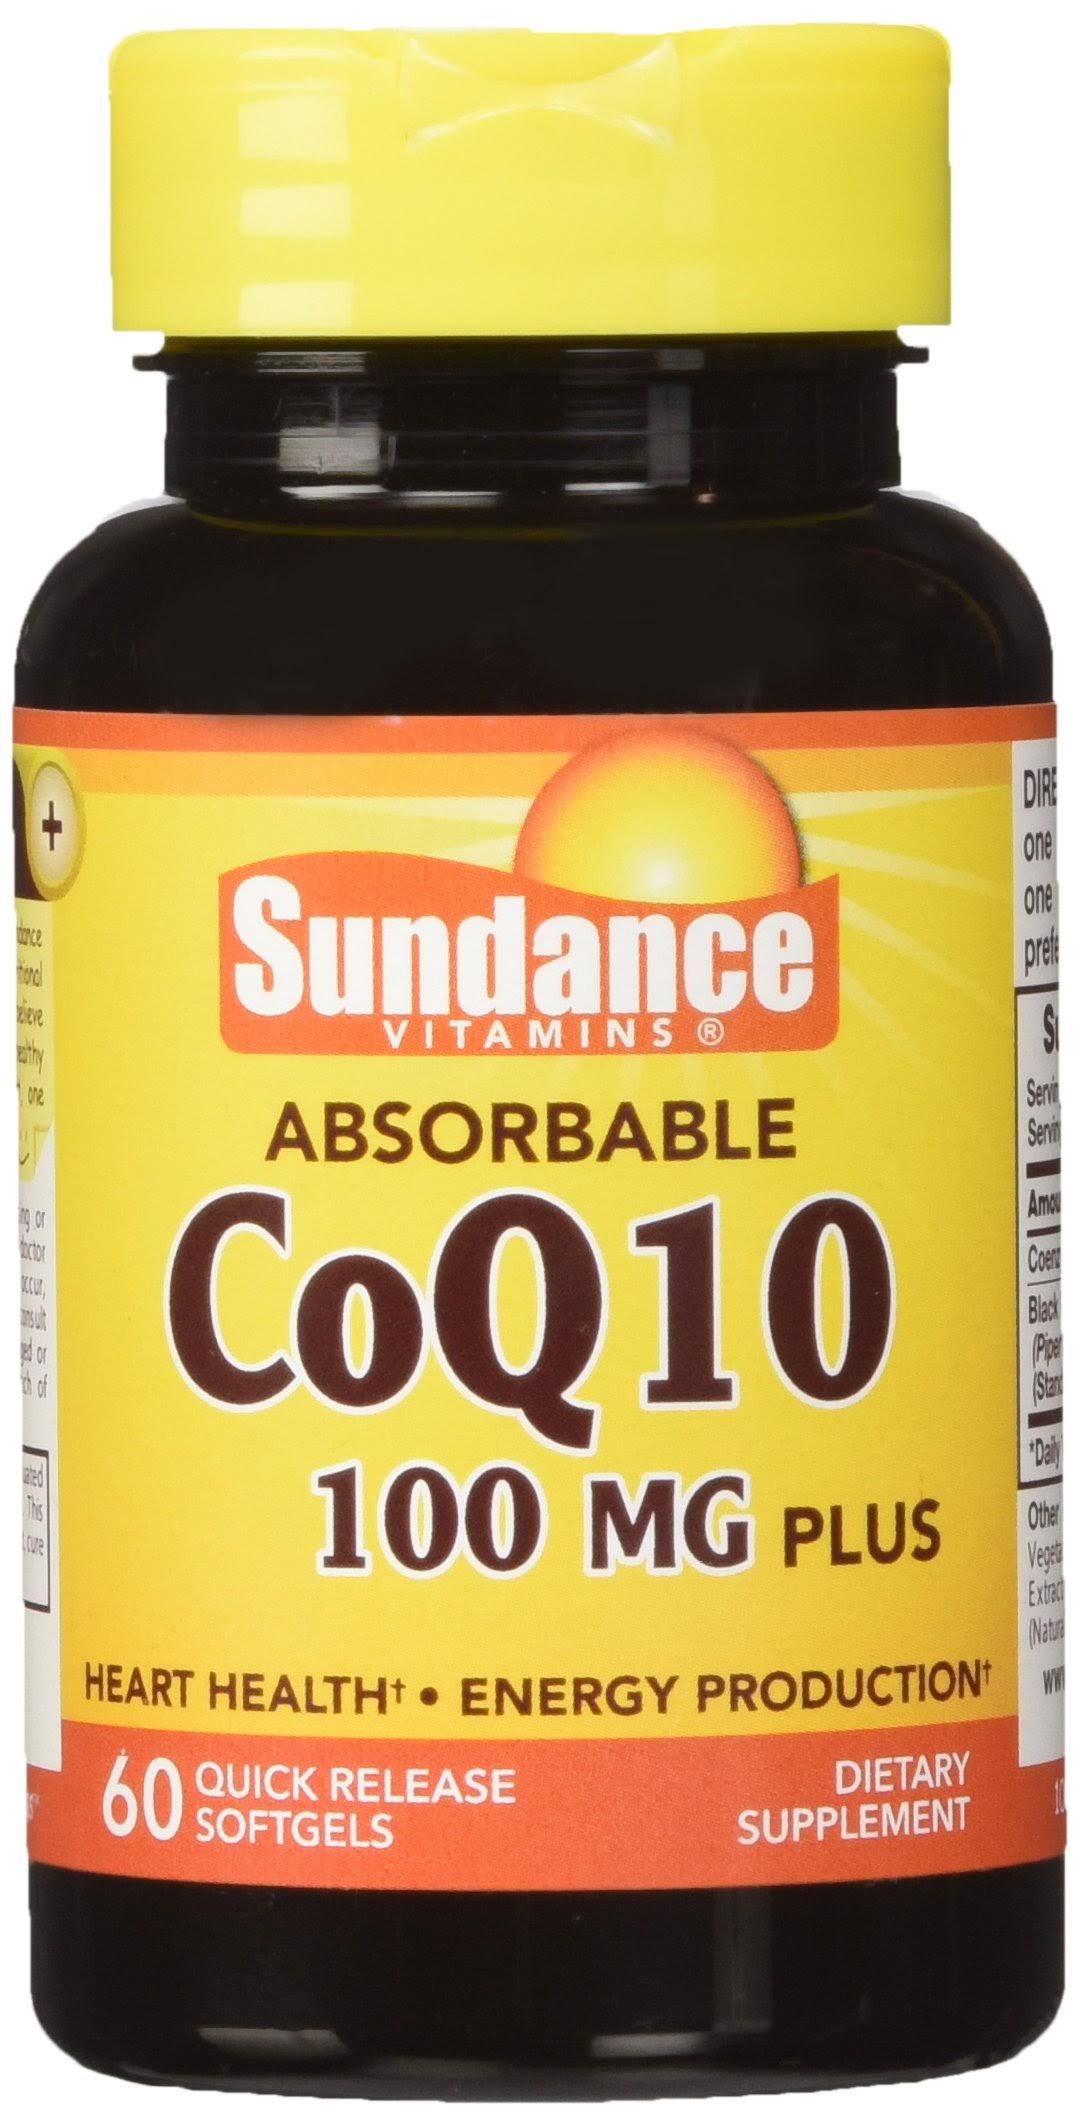 Sundance Absorb Co Q-10 Dietary Supplement - 100mg, 60ct